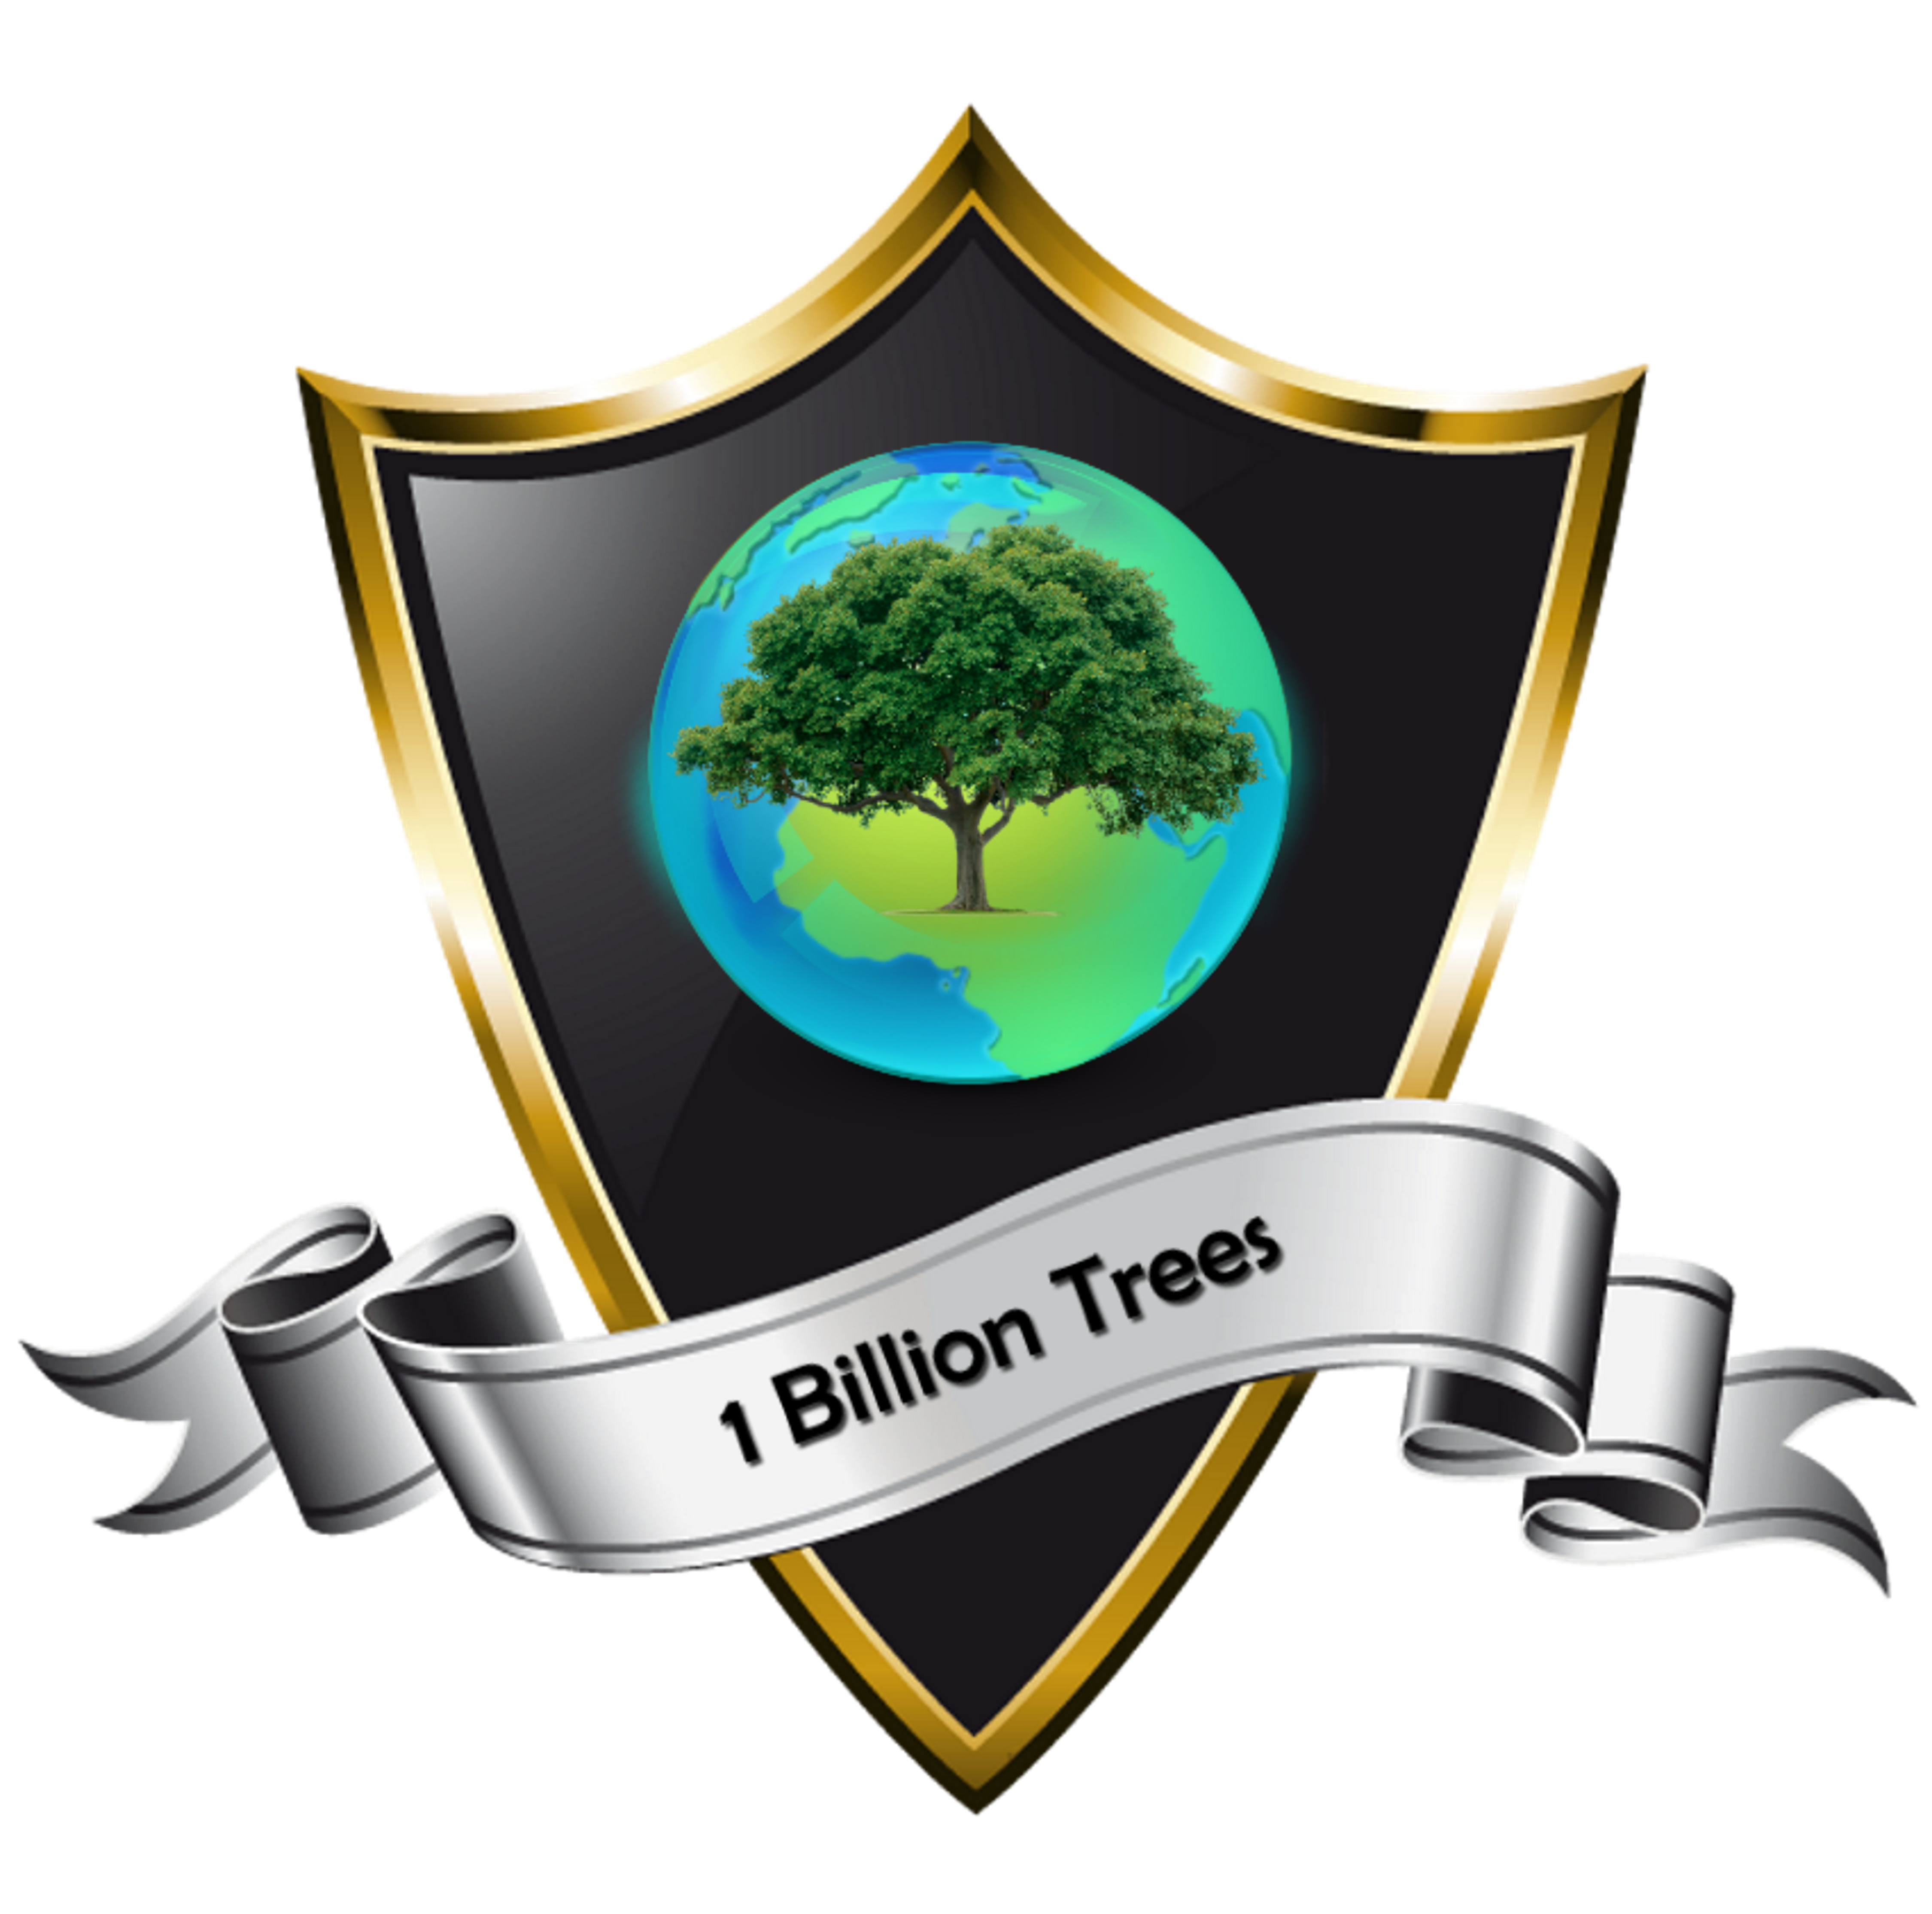 1BillionTrees--1